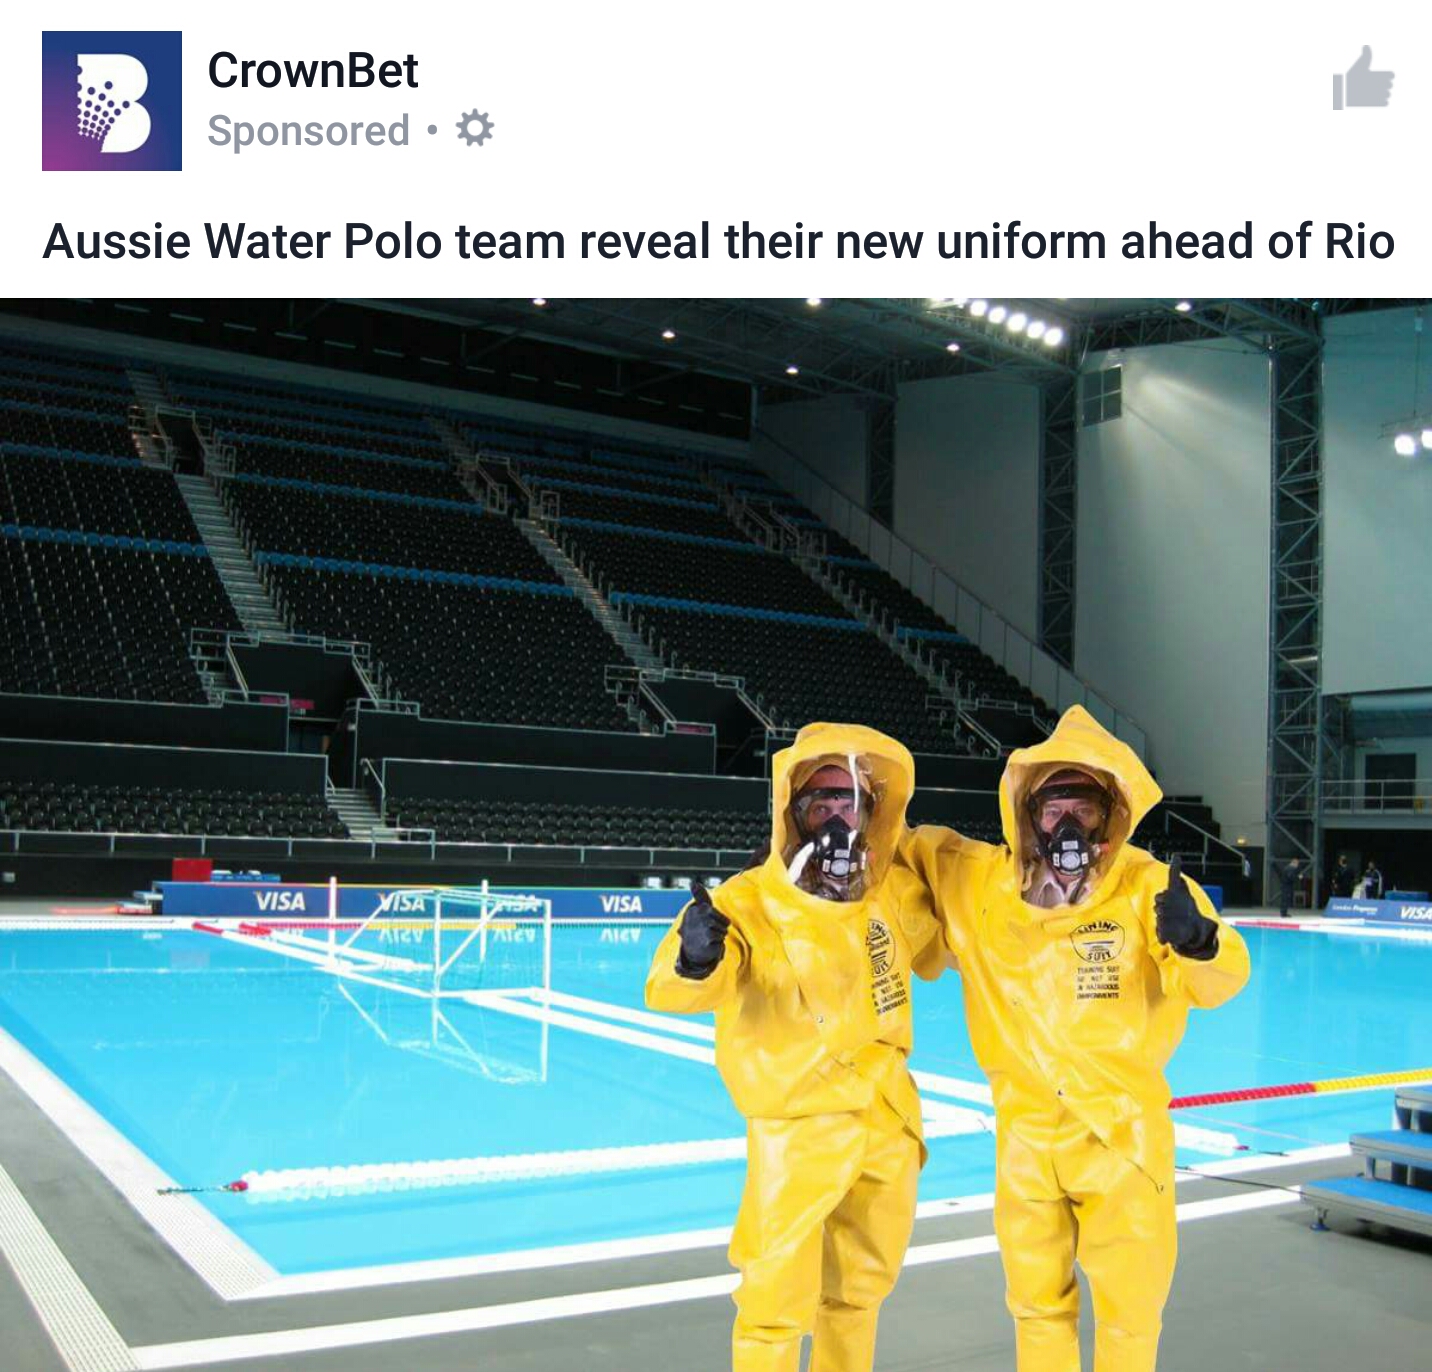 sport venue - CrownBet Sponsored Aussie Water Polo team reveal their new uniform ahead of Rio